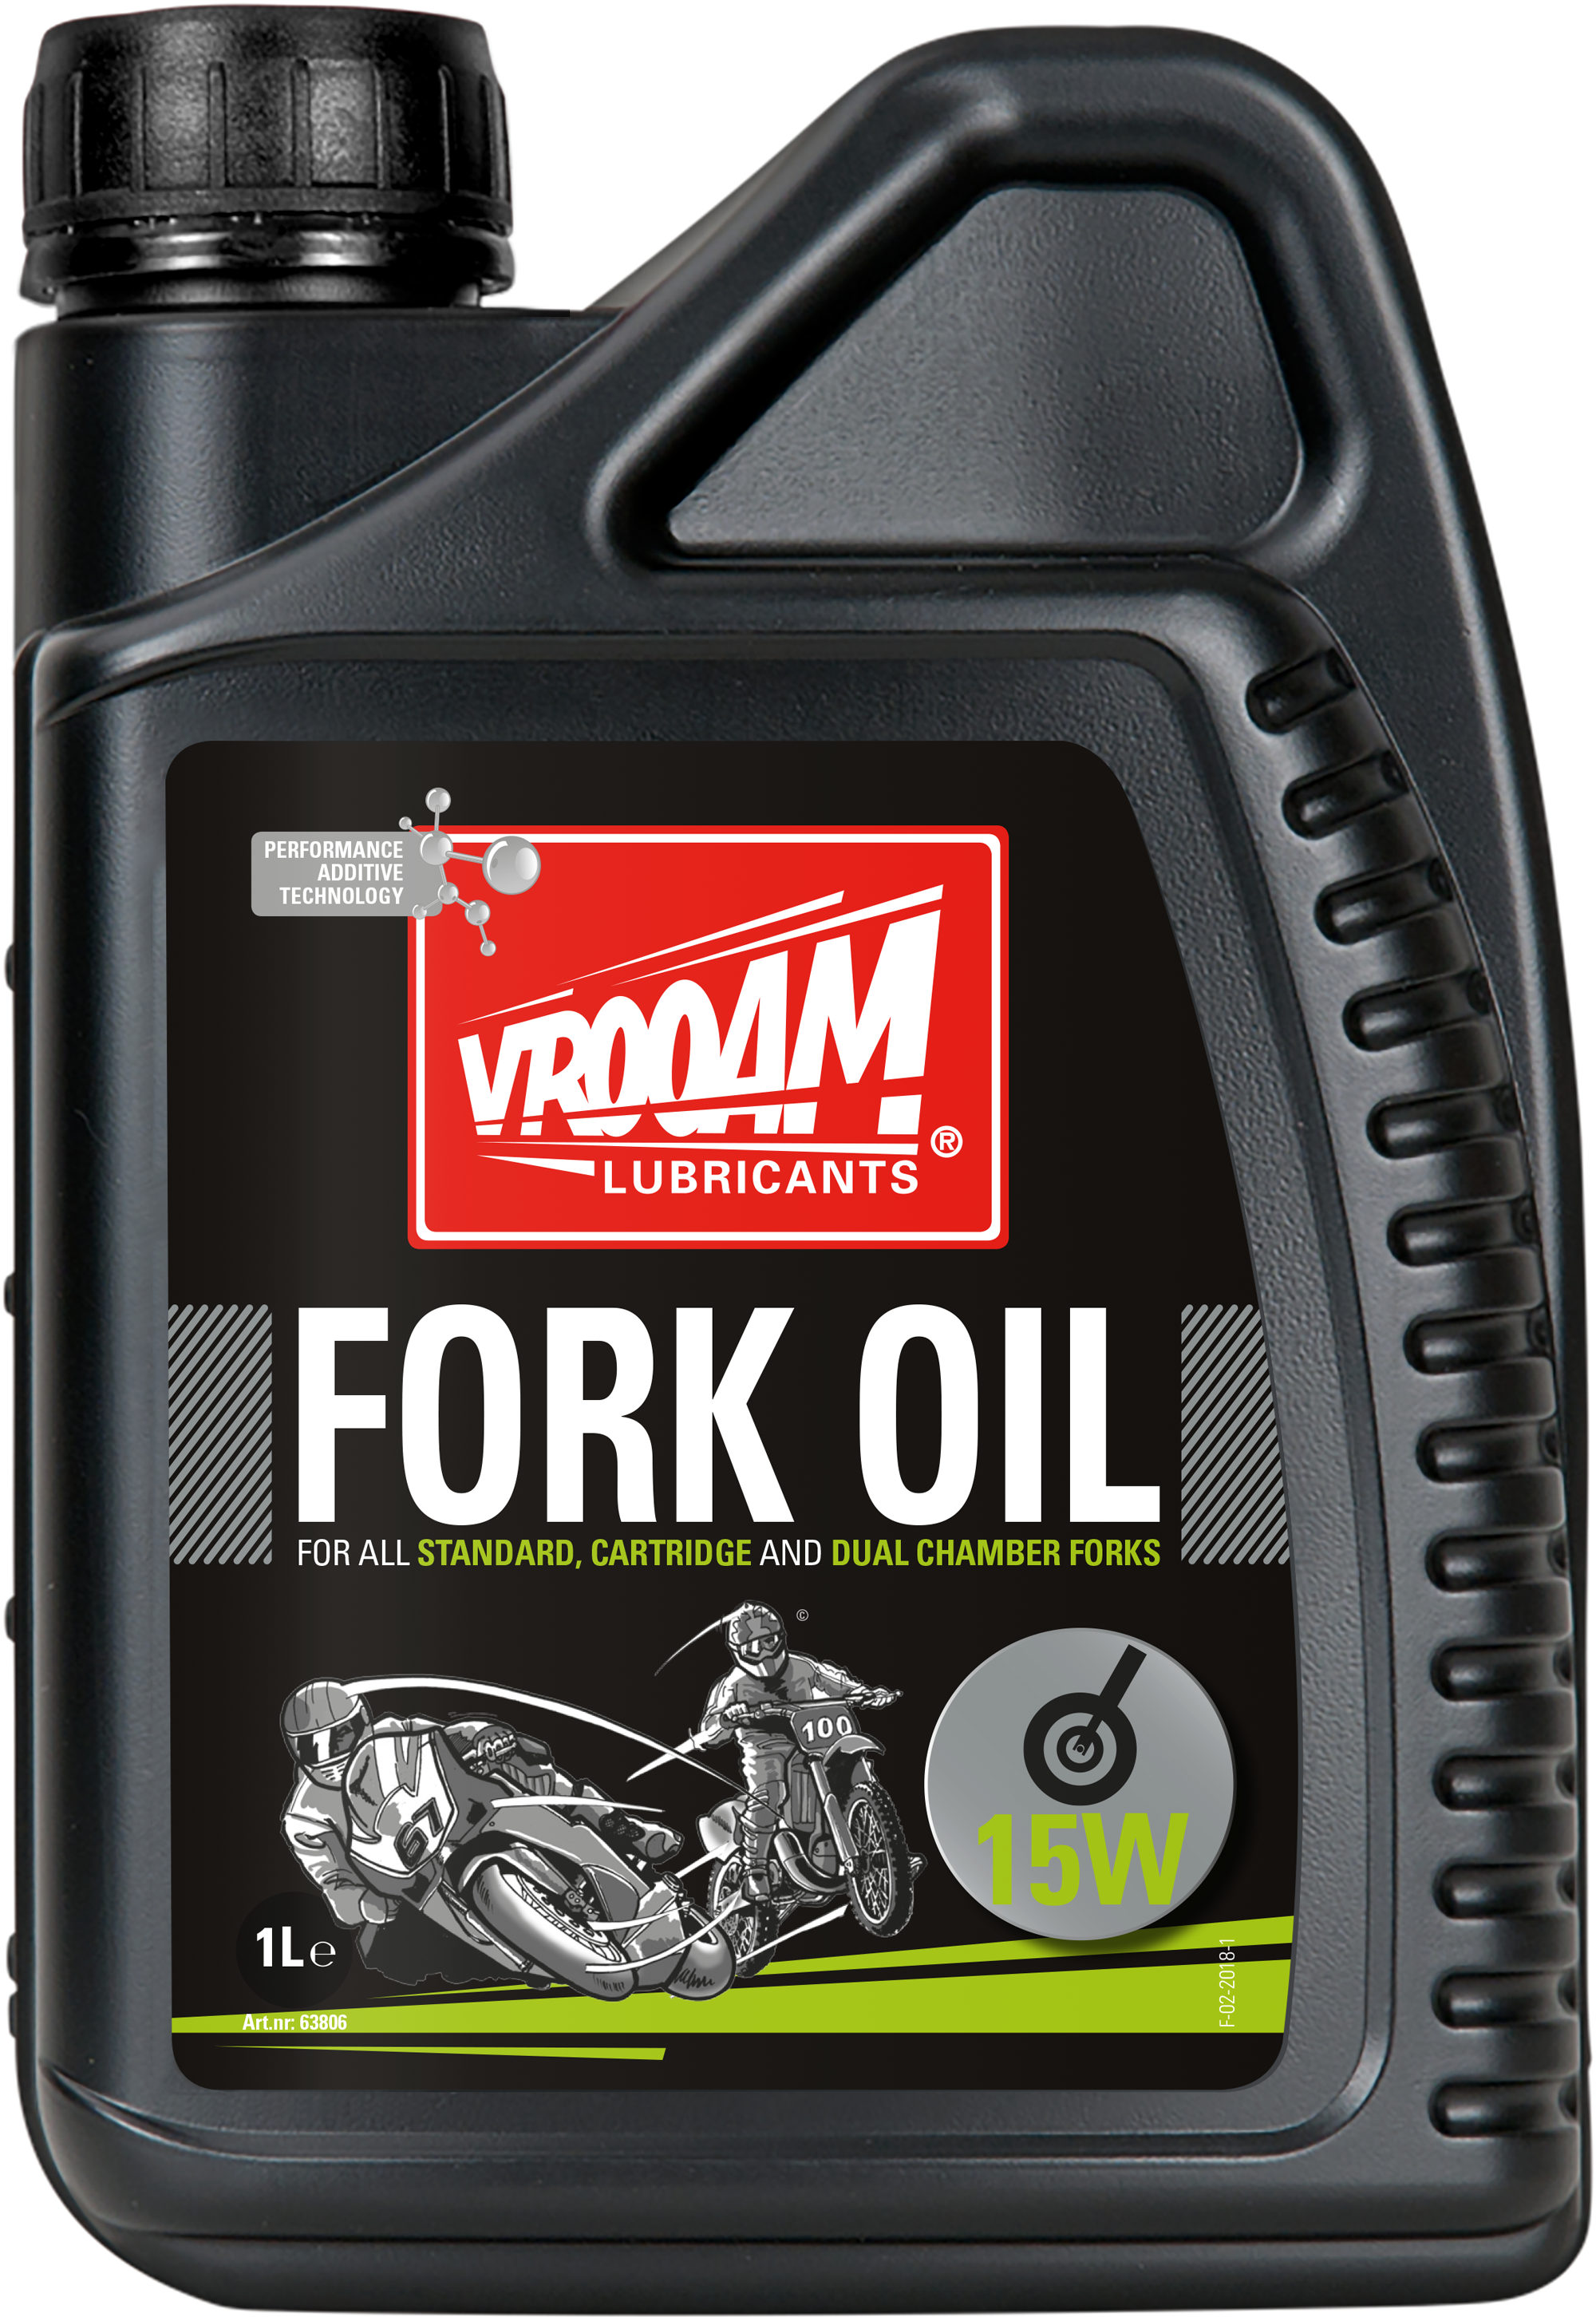 Vrooam Fork Oil 15W 1 L Size